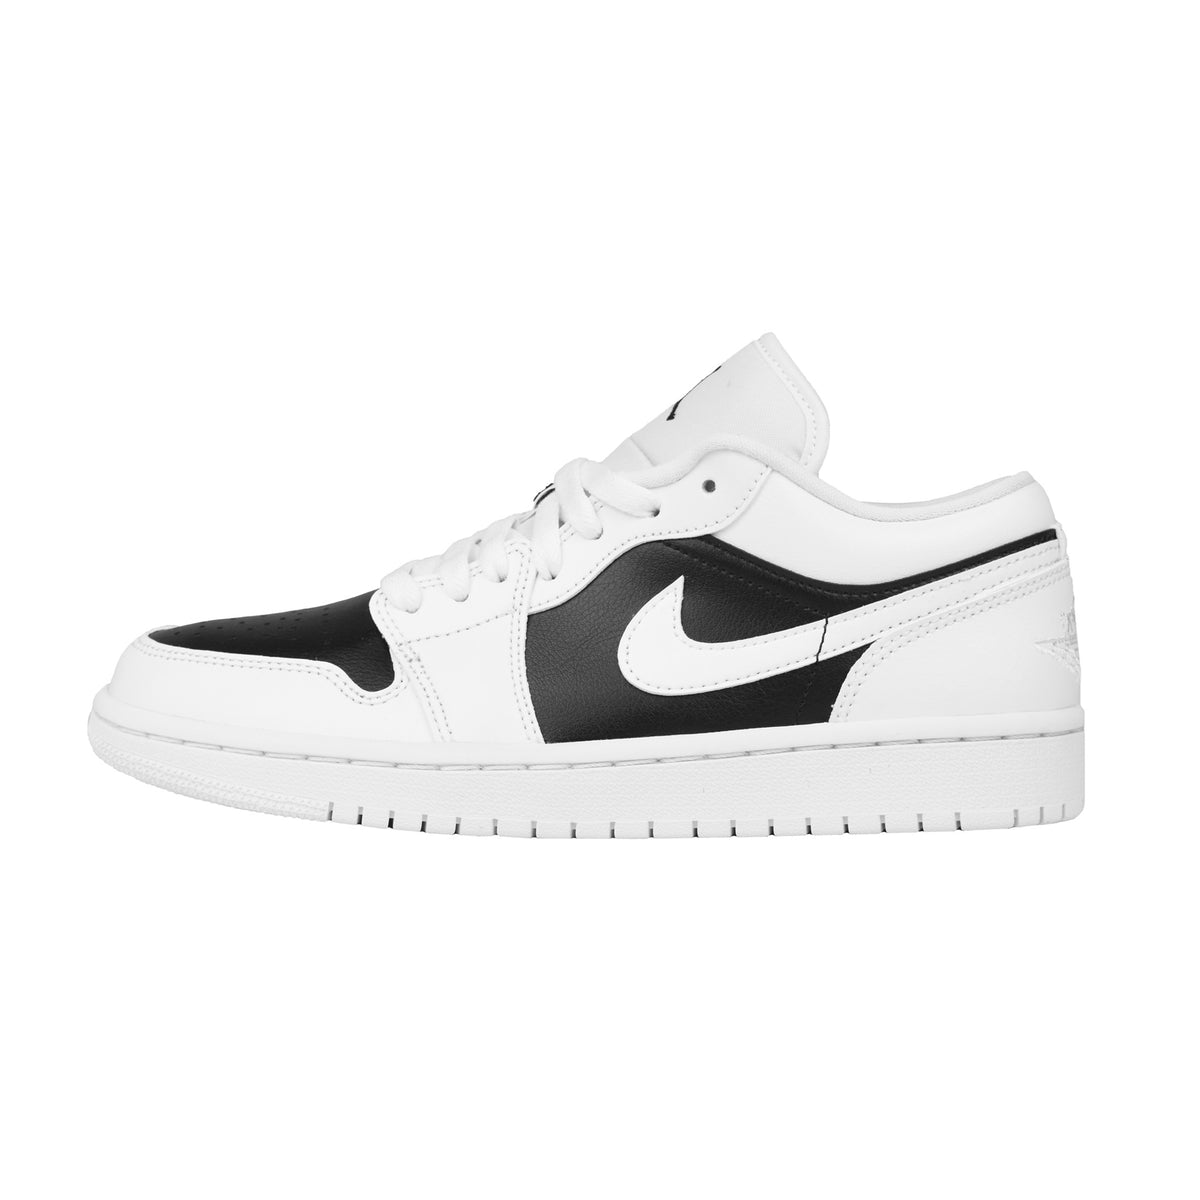 Nike Air Jordan 1 Low - Panda Black/ White | Points Streetwear Store ...